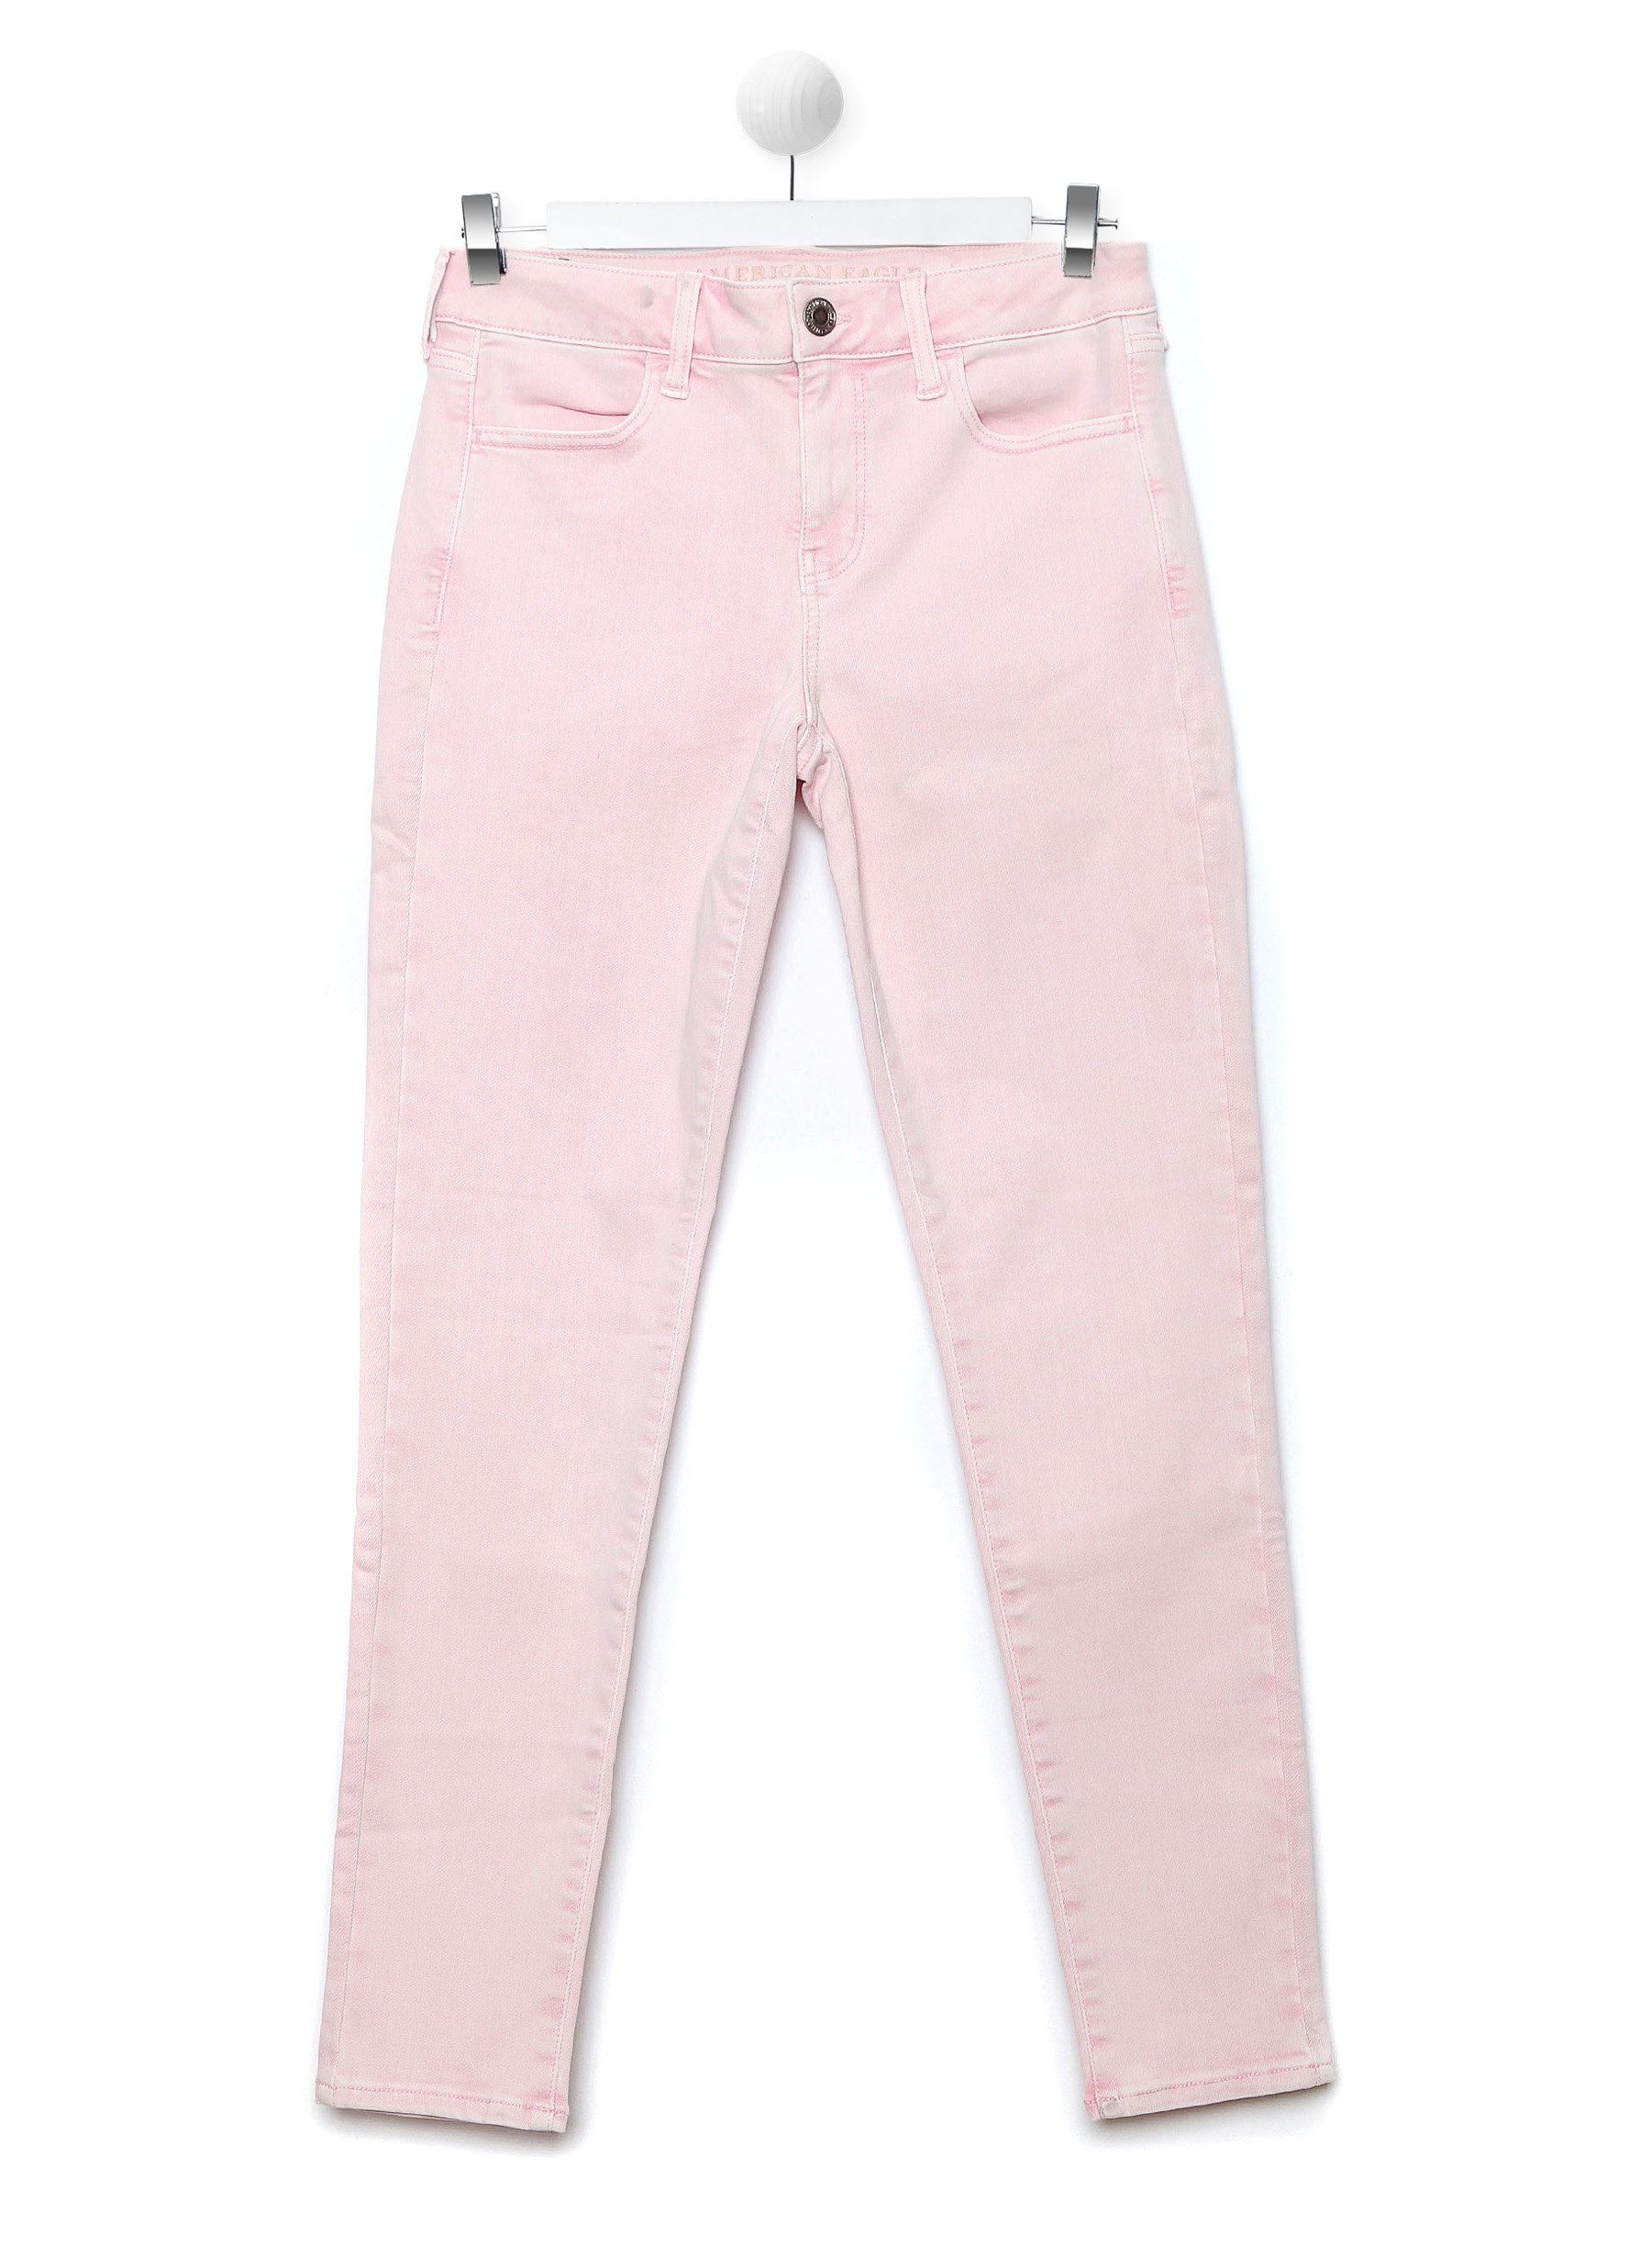 Compressed warrant Unforeseen circumstances ροζ - Γυναικεία Παντελόνια με εύρος τιμών 0€ - 30€ | Outfit.gr